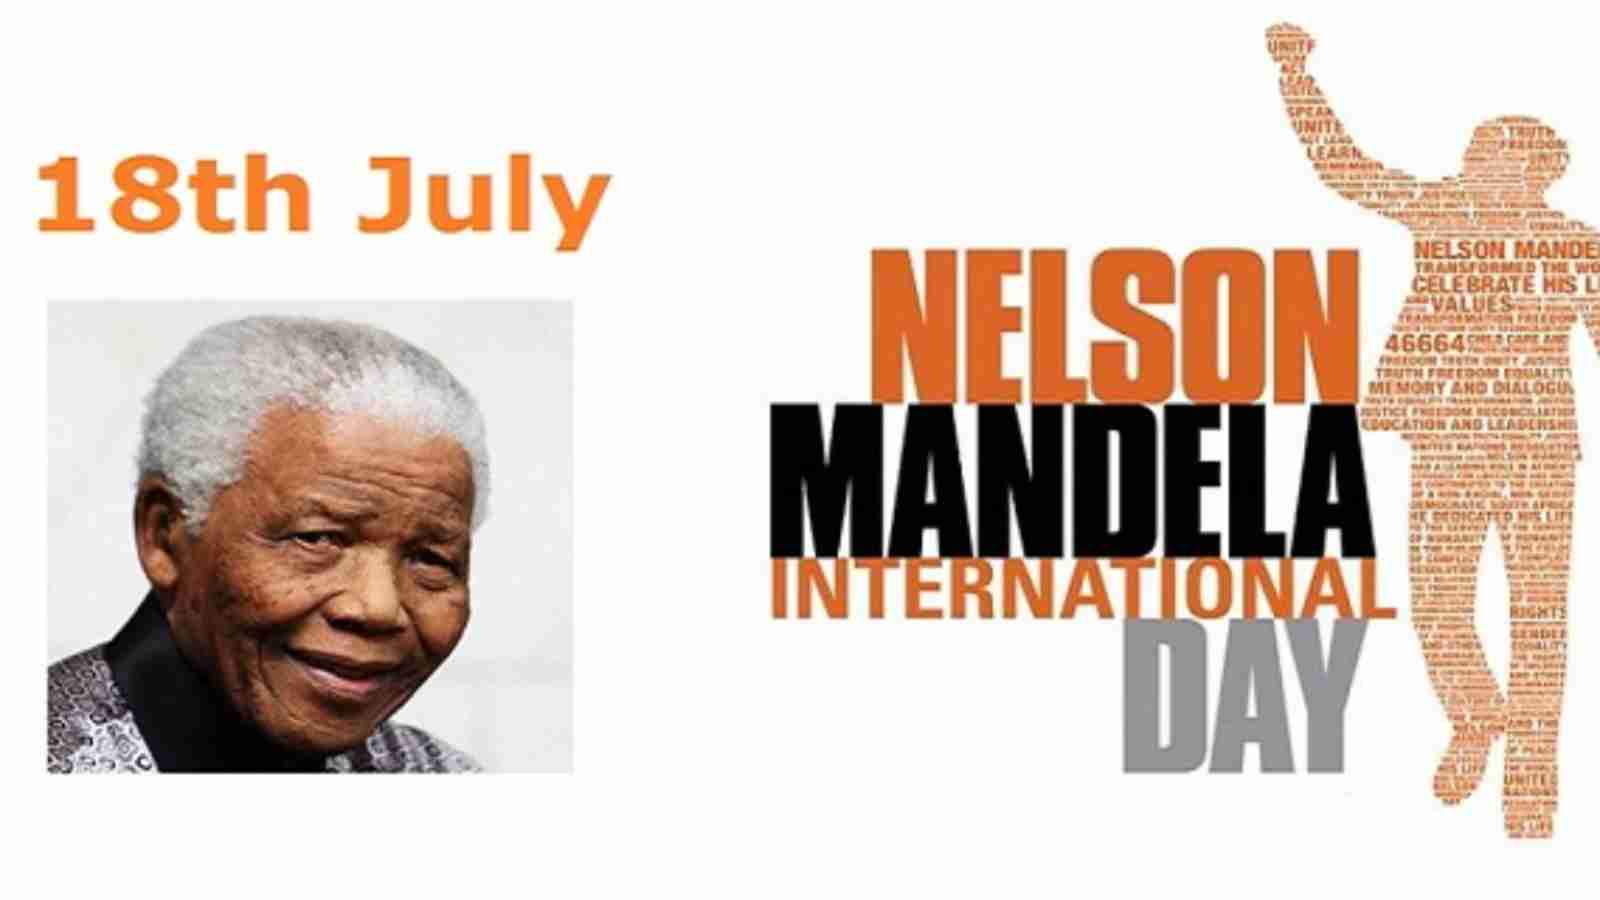 Nelson Mandela International Day 2022: Legacy, Timeline of his Life